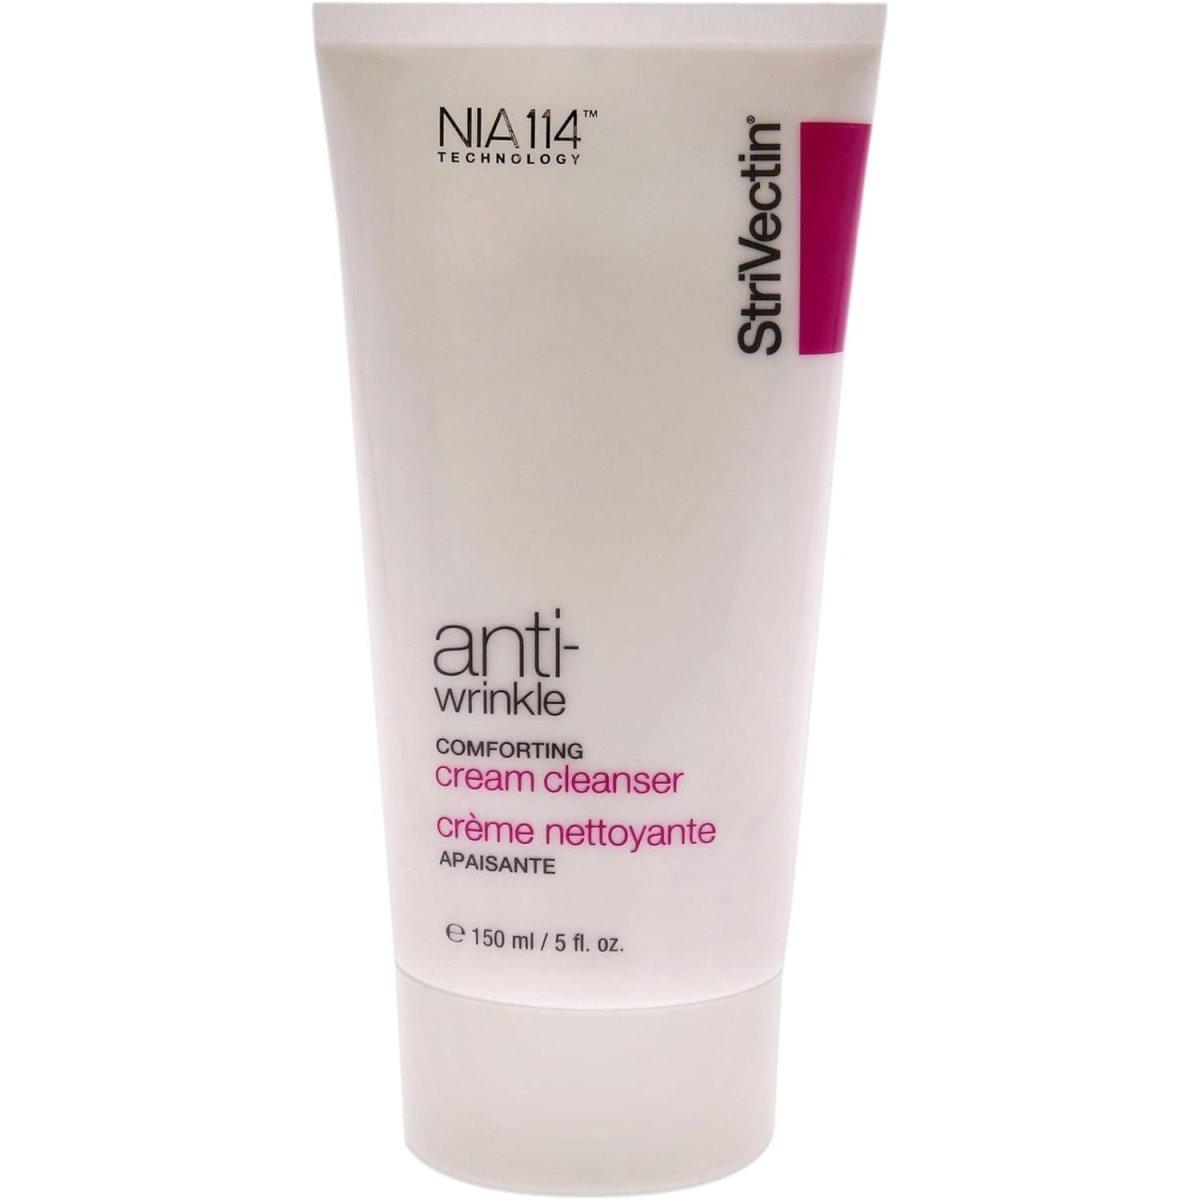 Strivectin Anti-Wrinkle Comforting Cream Cleanser - 150 ml - Glam Global UK